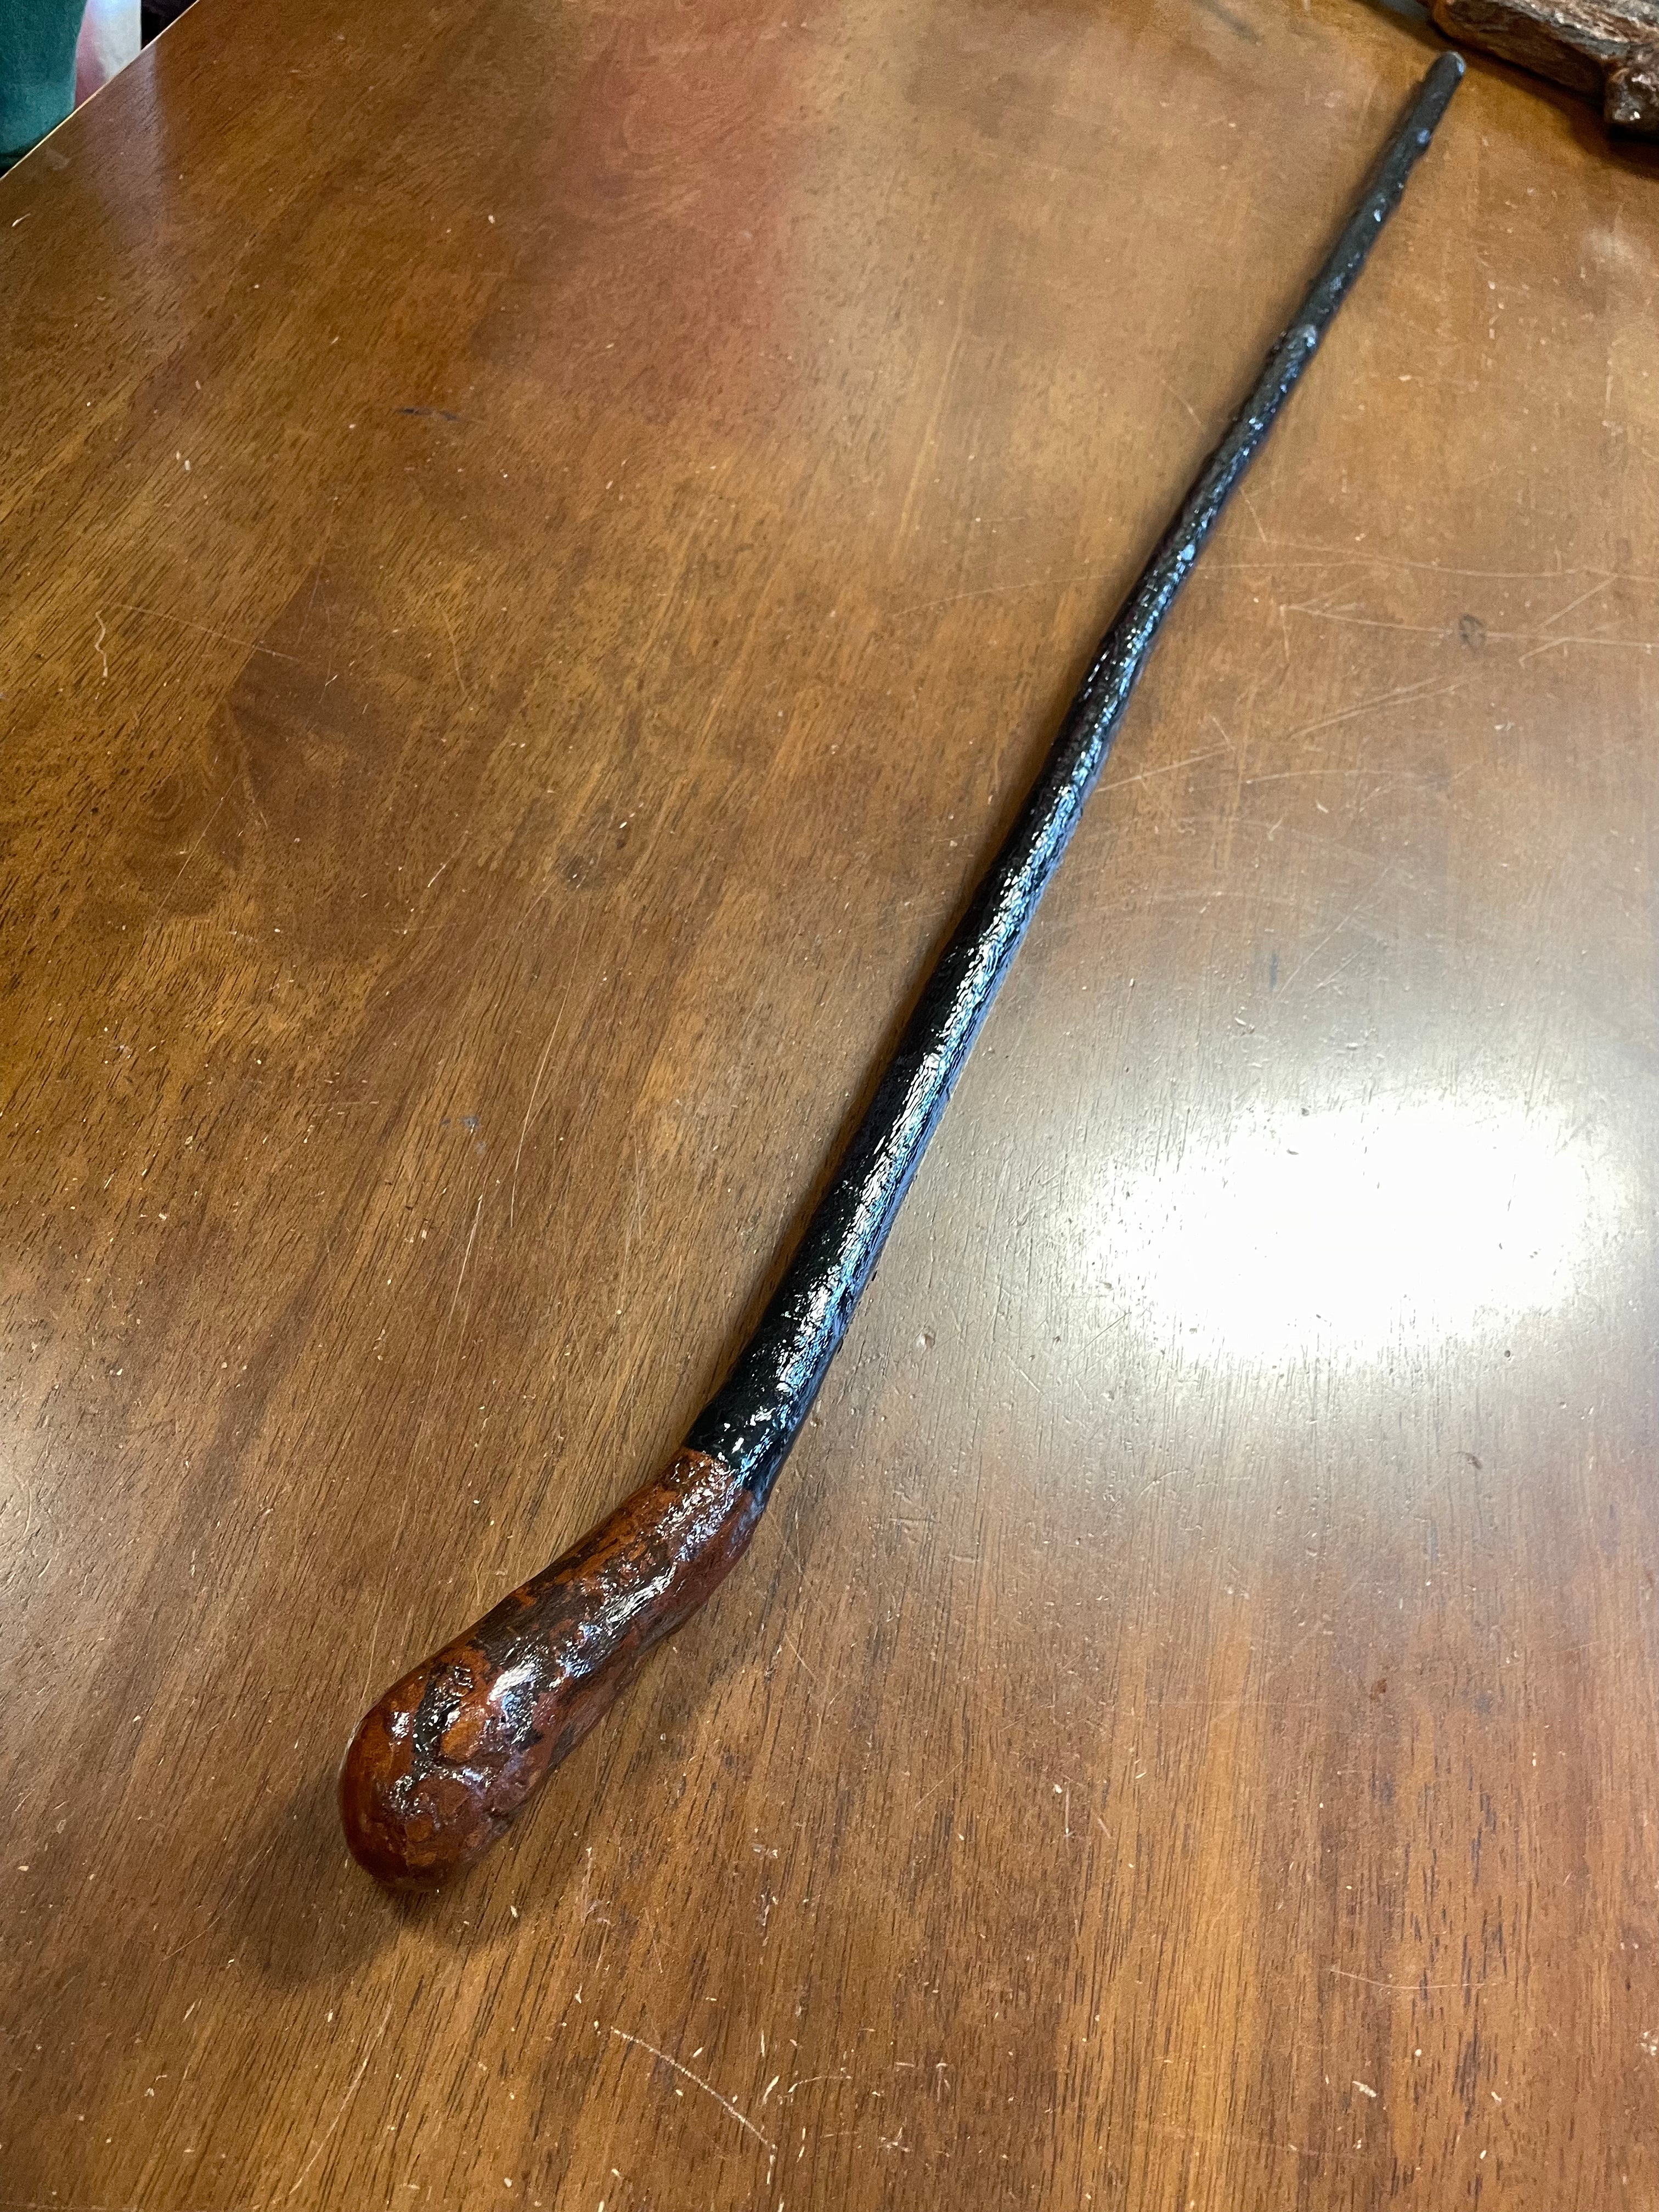 Blackthorn Walking Stick 38 1/4 inch - Handmade in Ireland